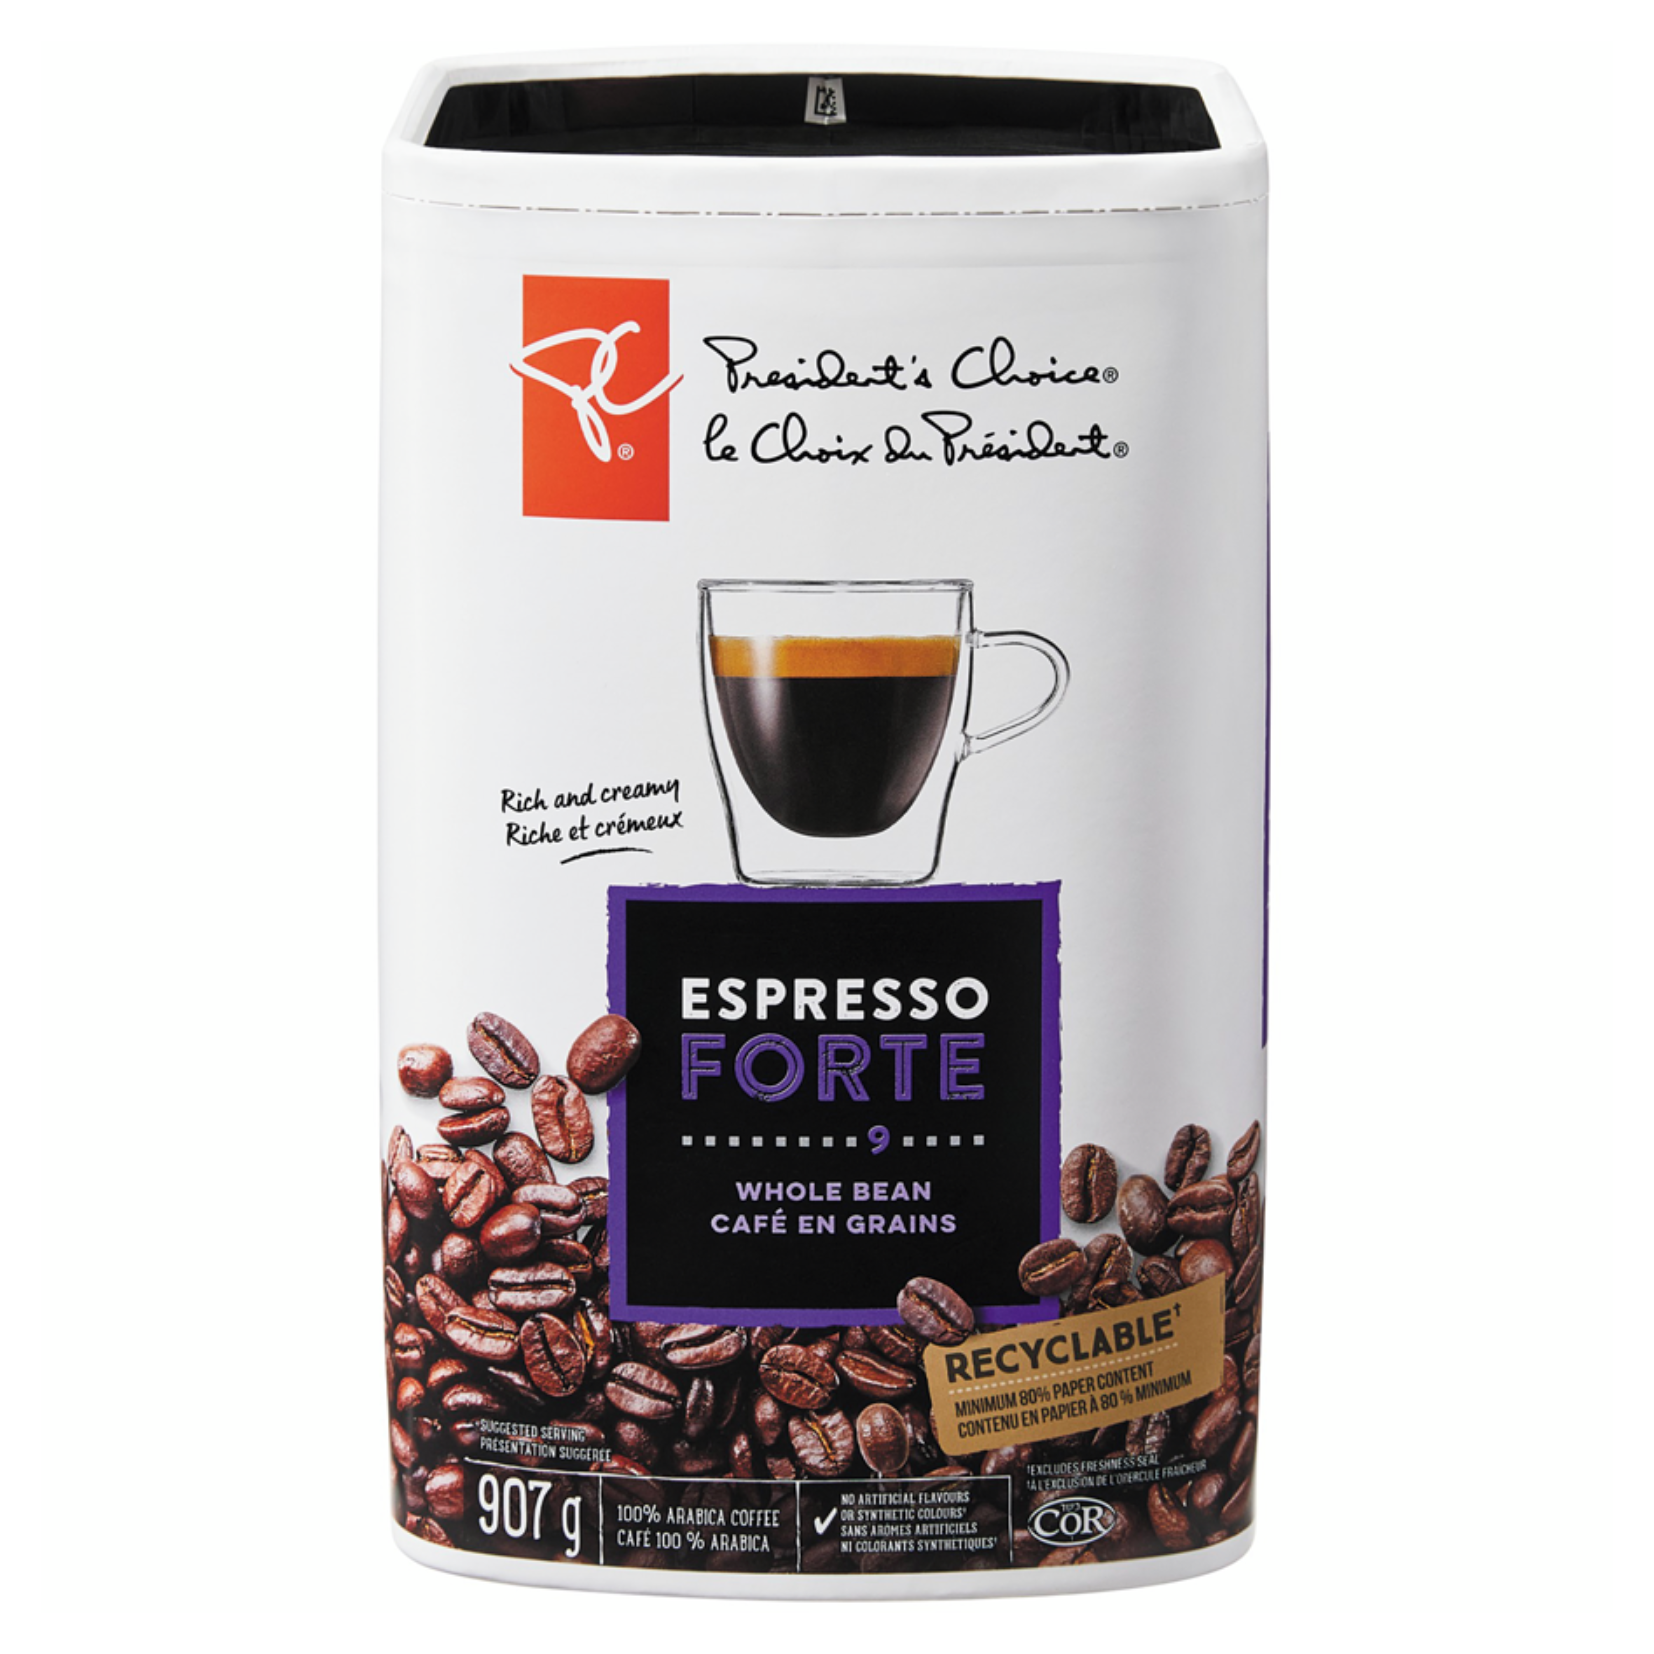 President's Choice Espresso Forte Whole Bean Coffee